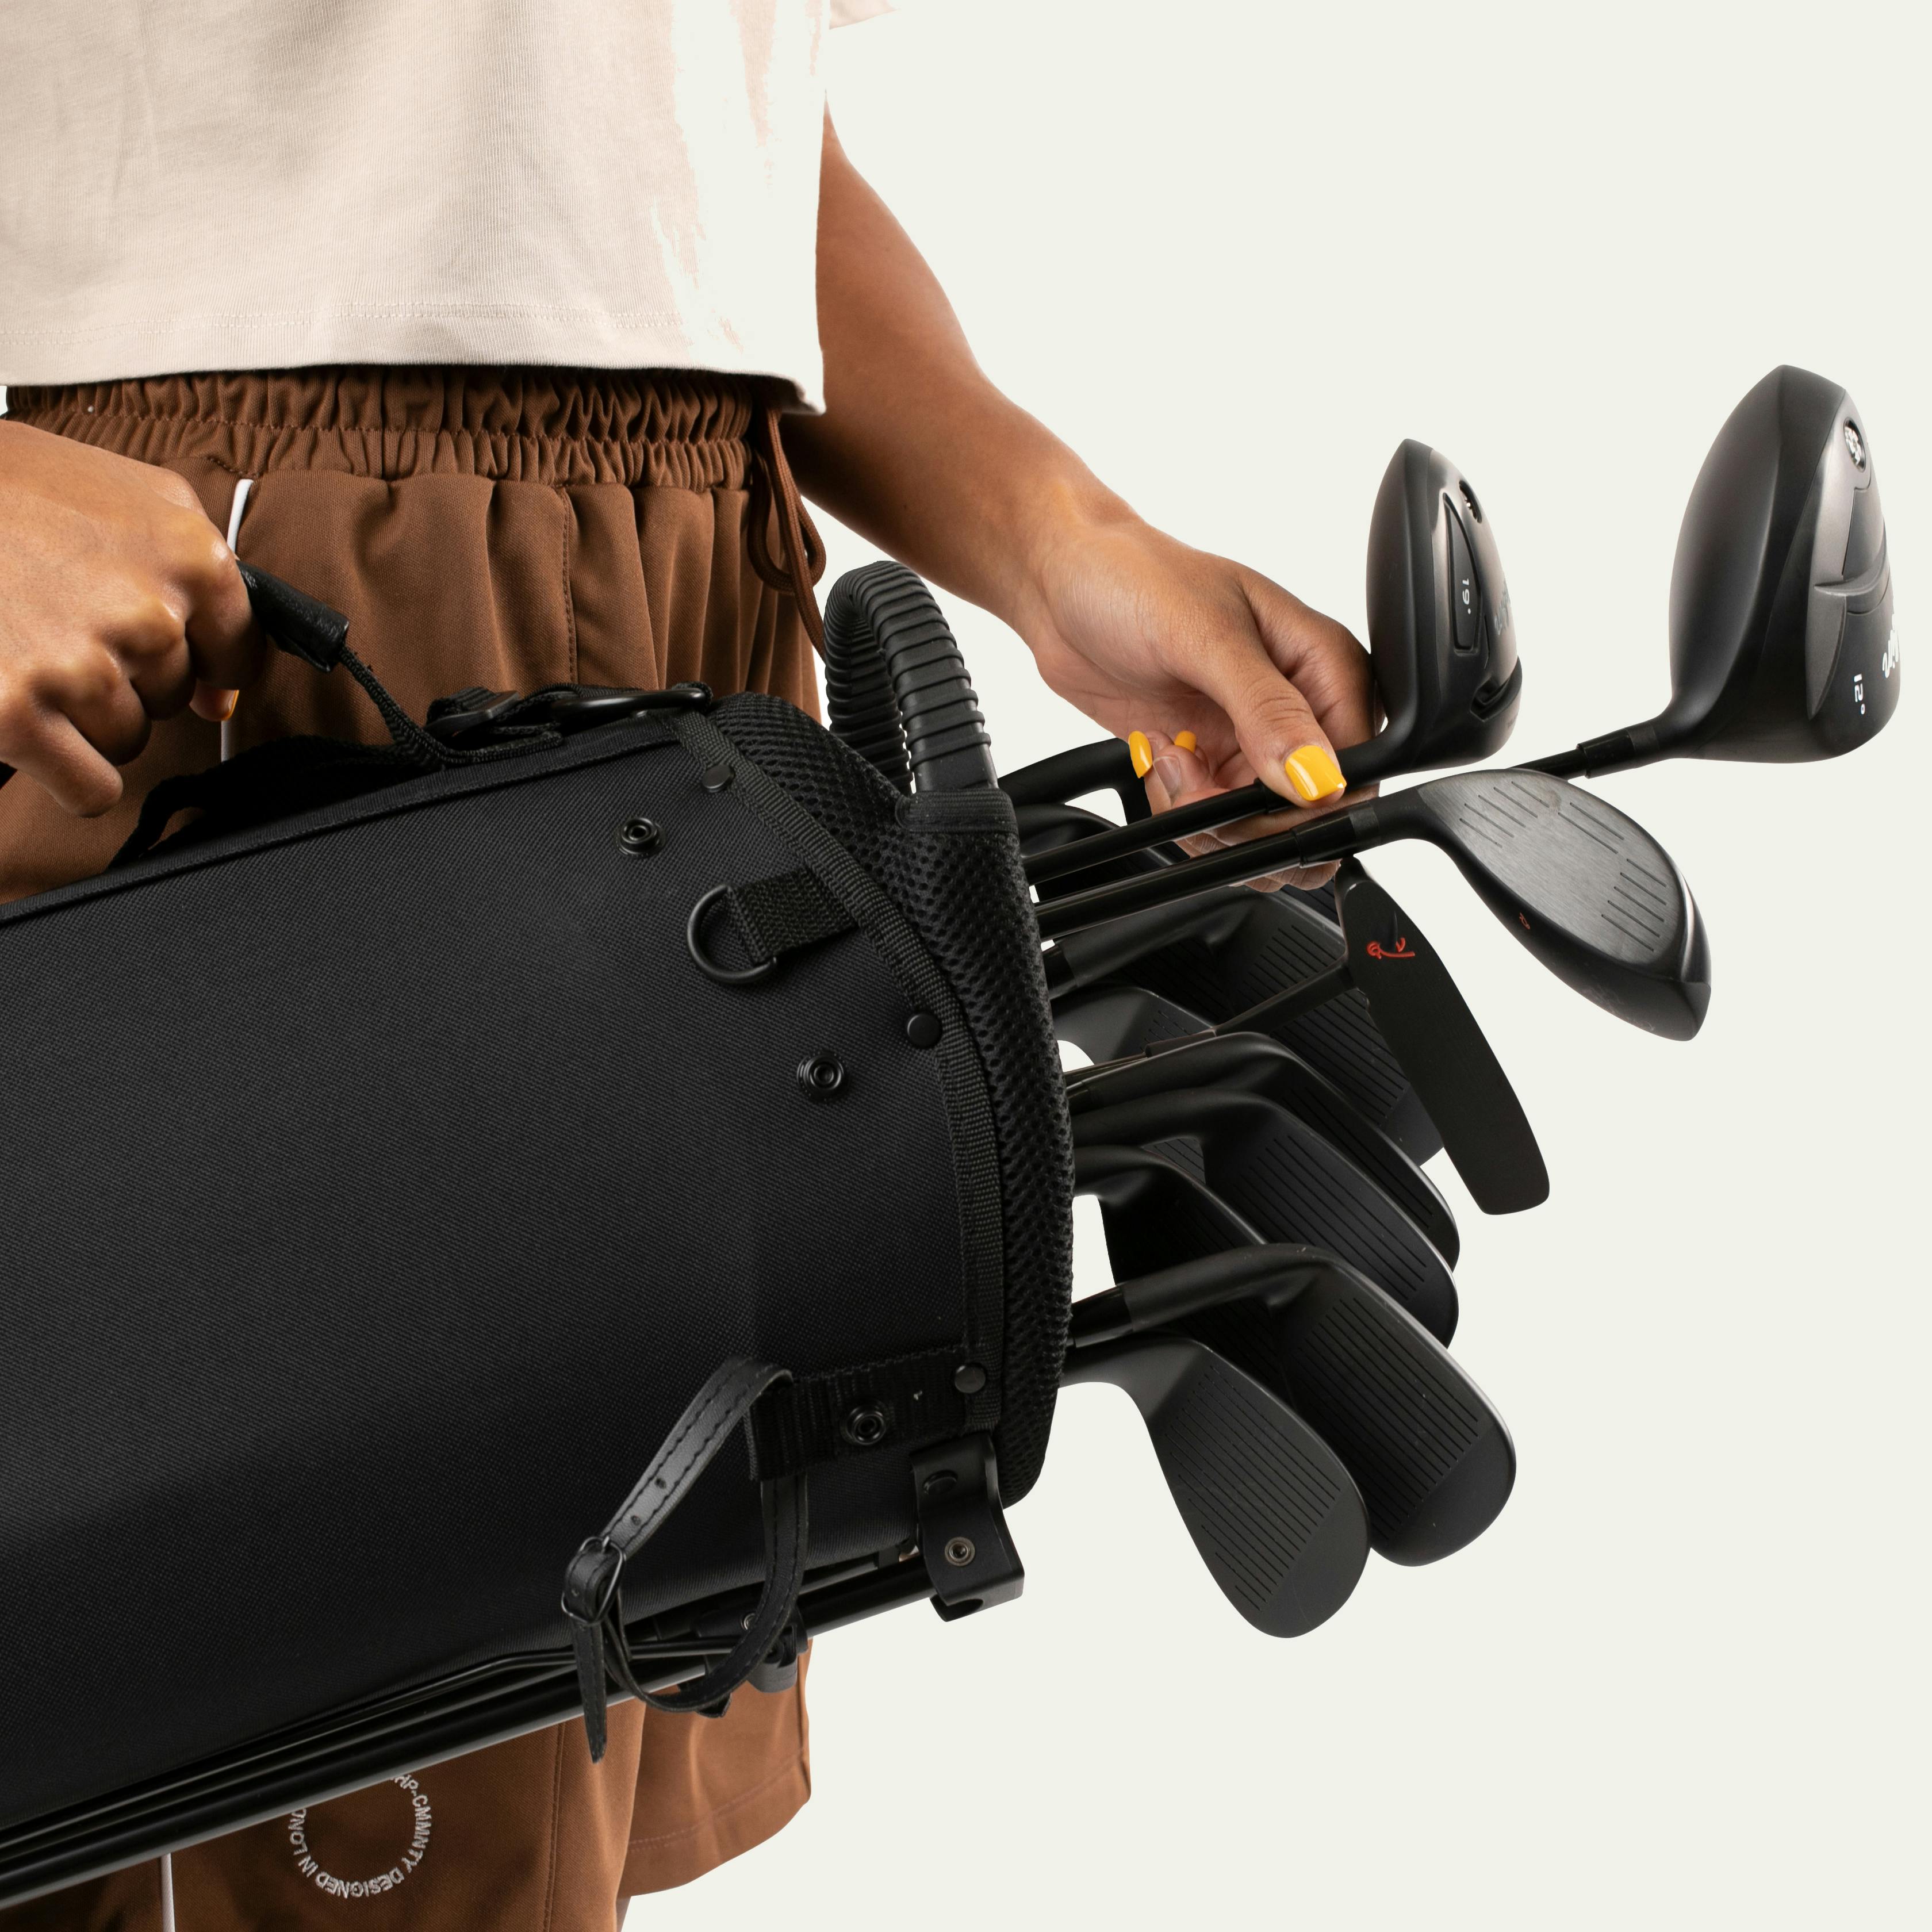 Robin Golf Women's Competition 13-Club Golf Set (Bag + Head covers) · LH · Standard